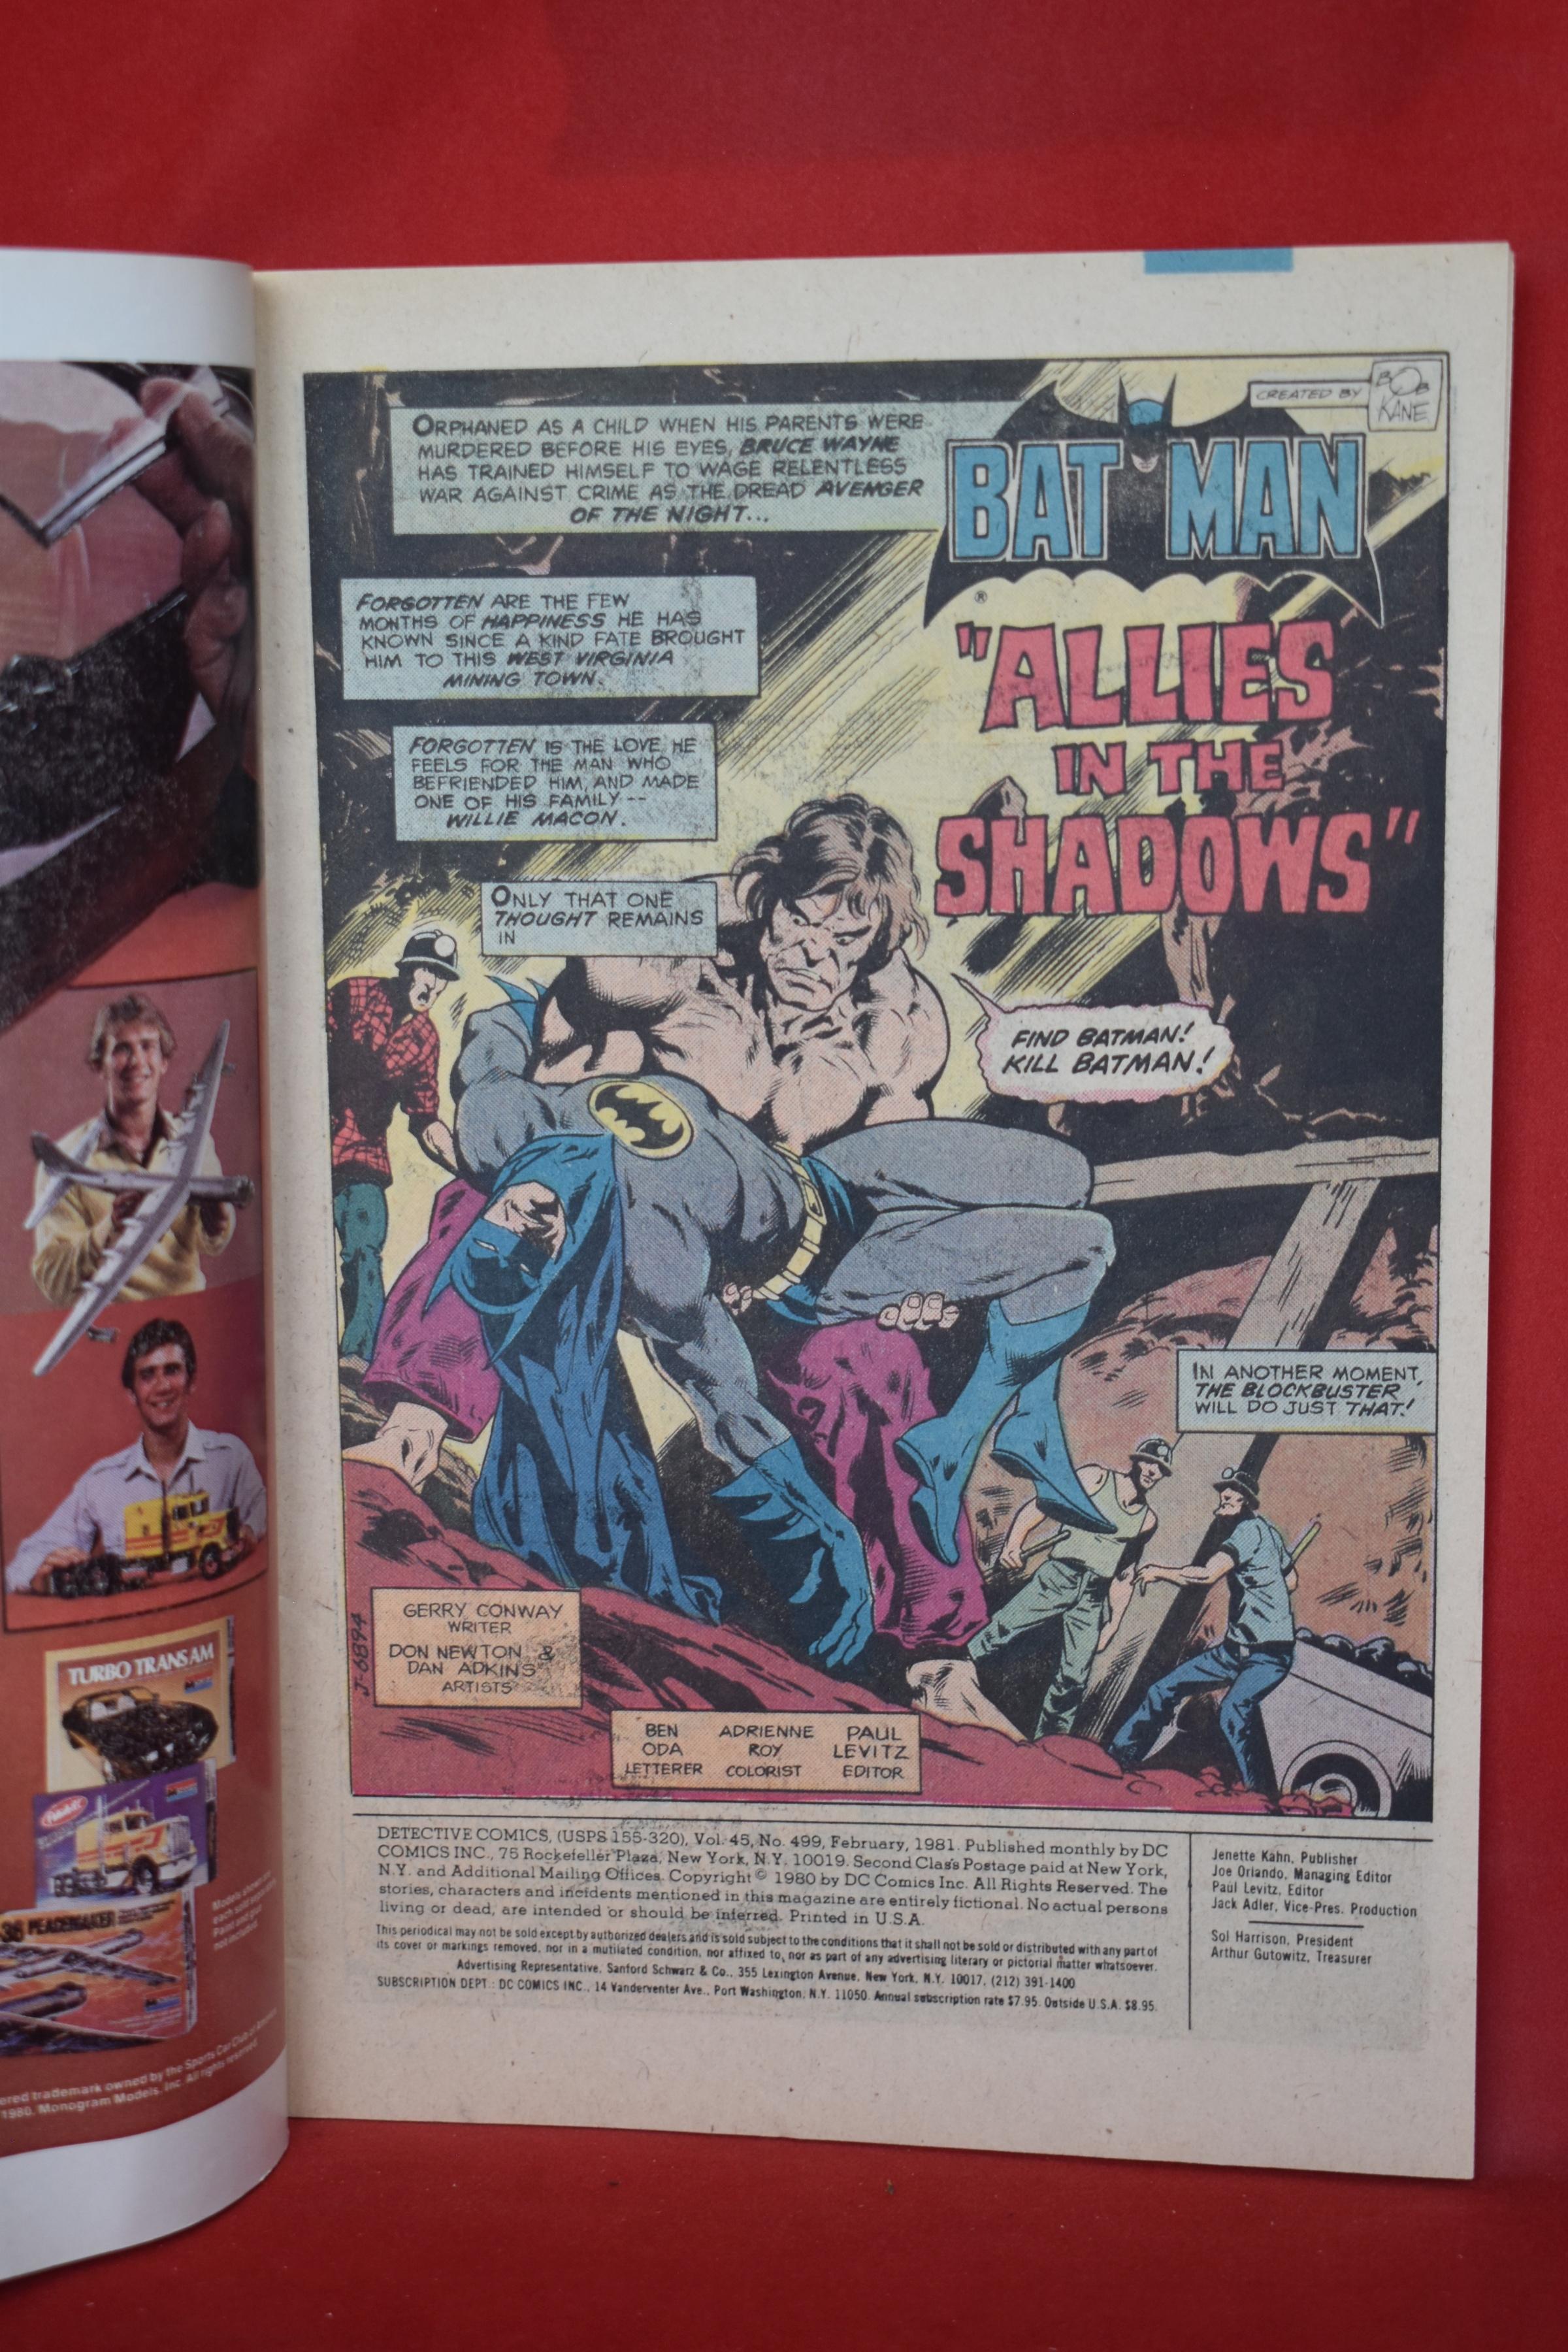 DETECTIVE COMICS #499 | ALLIES IN THE SHADOWS! | JIM APARO - NEWSSTAND